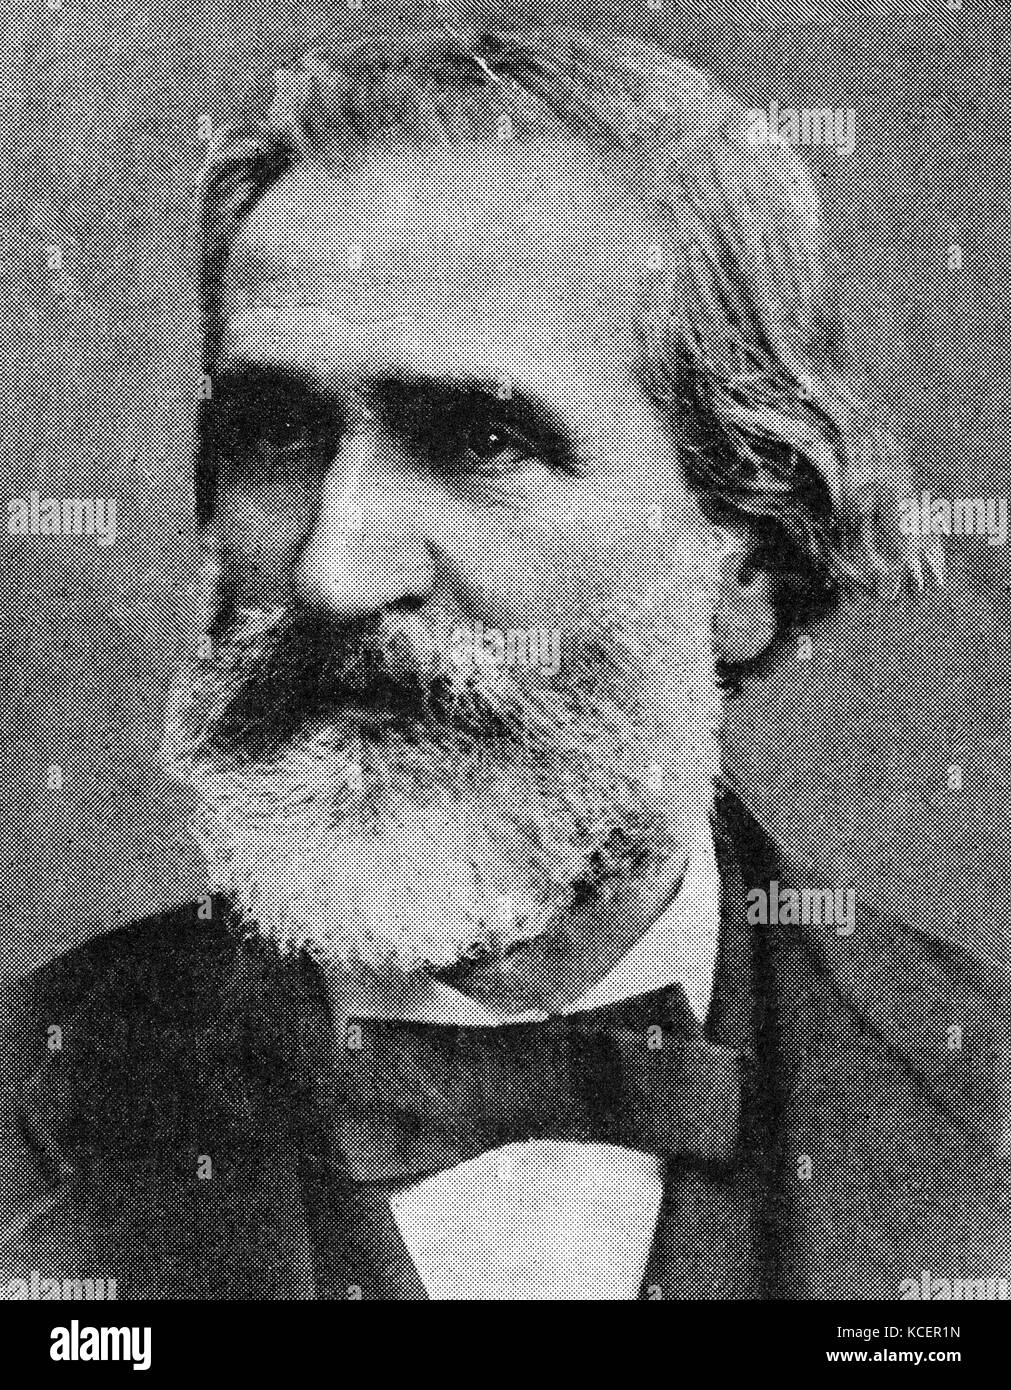 Photograph of Giuseppe Verdi (1813-1901) an Italian opera composer. Dated 19th Century Stock Photo